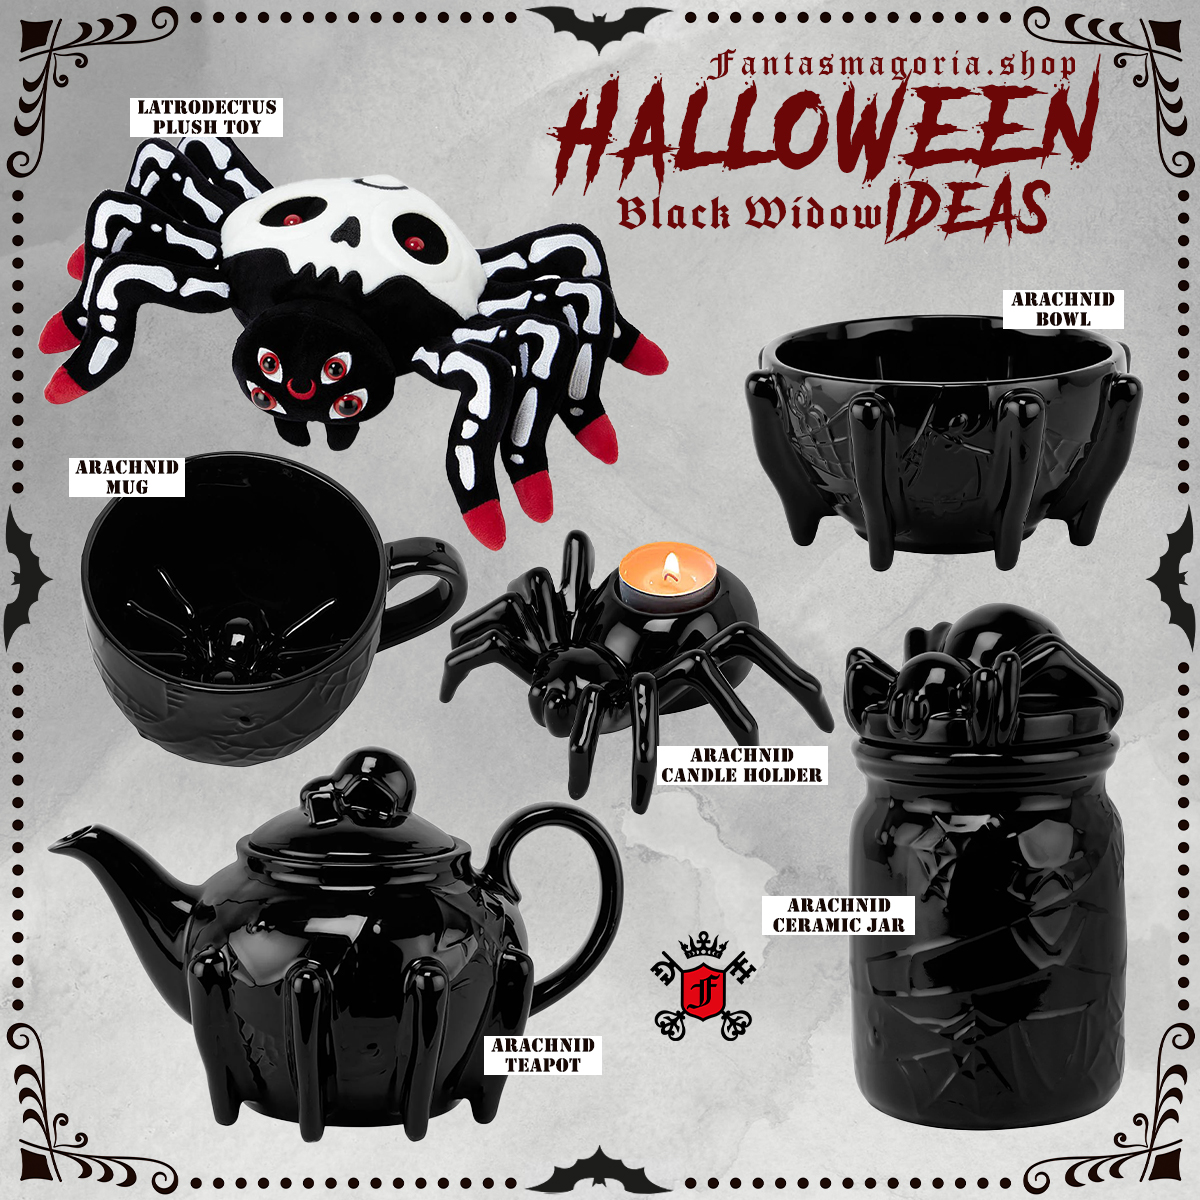 A collage showcasing Fantasmagoria's Halloween Black Widow-themed interior decoration items.